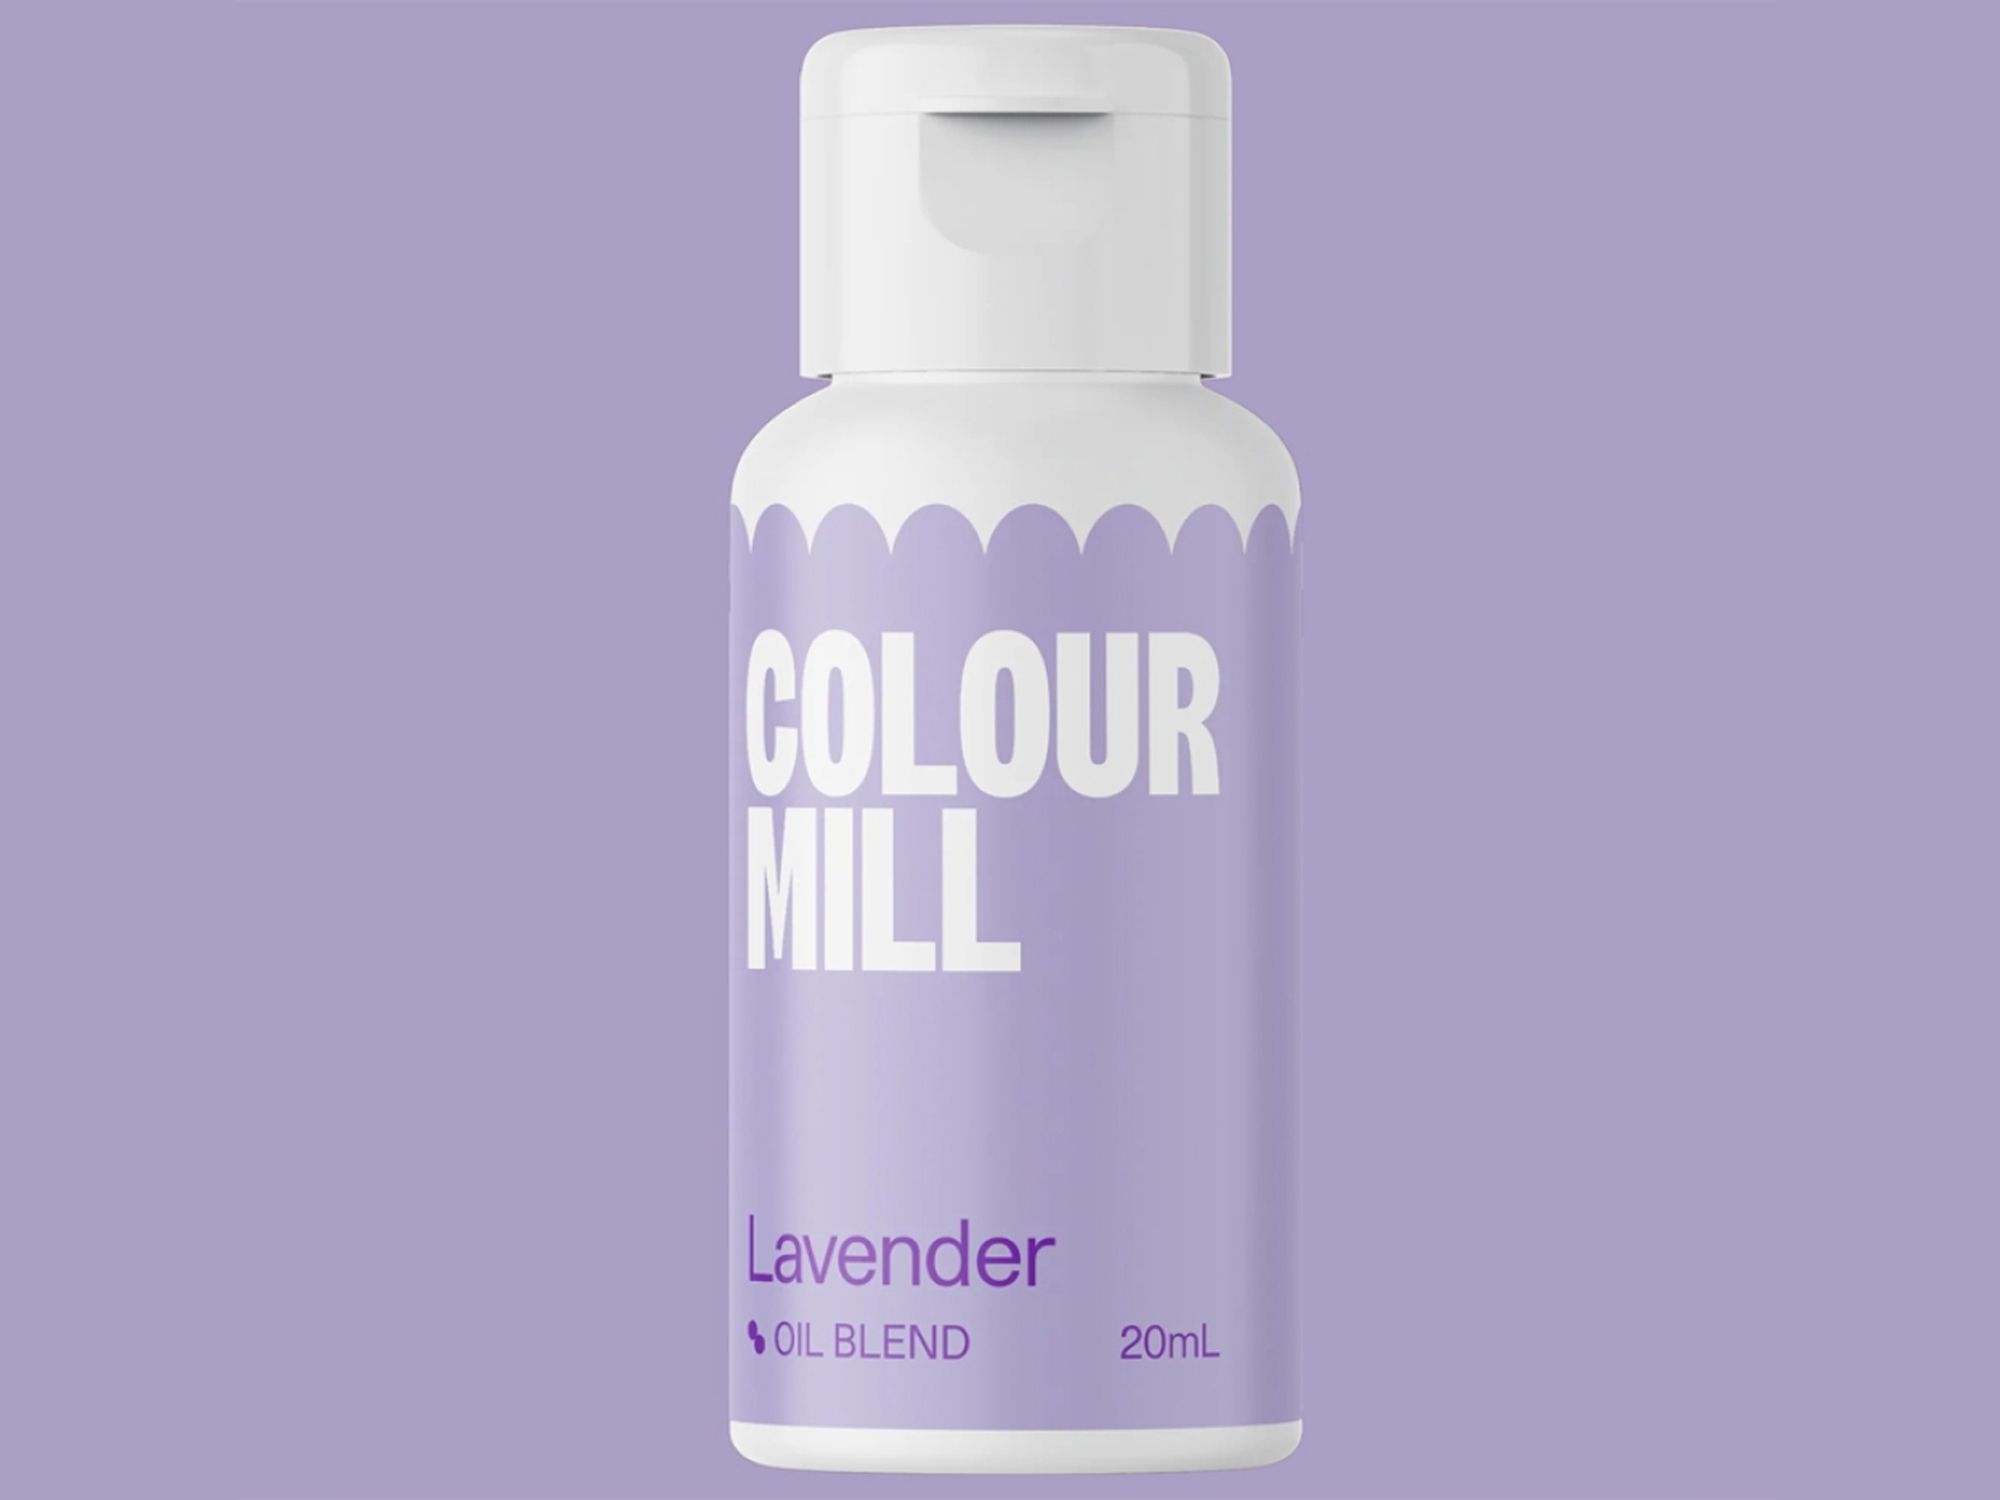 Colour Mill Lavender (Oil Blend) 20ml